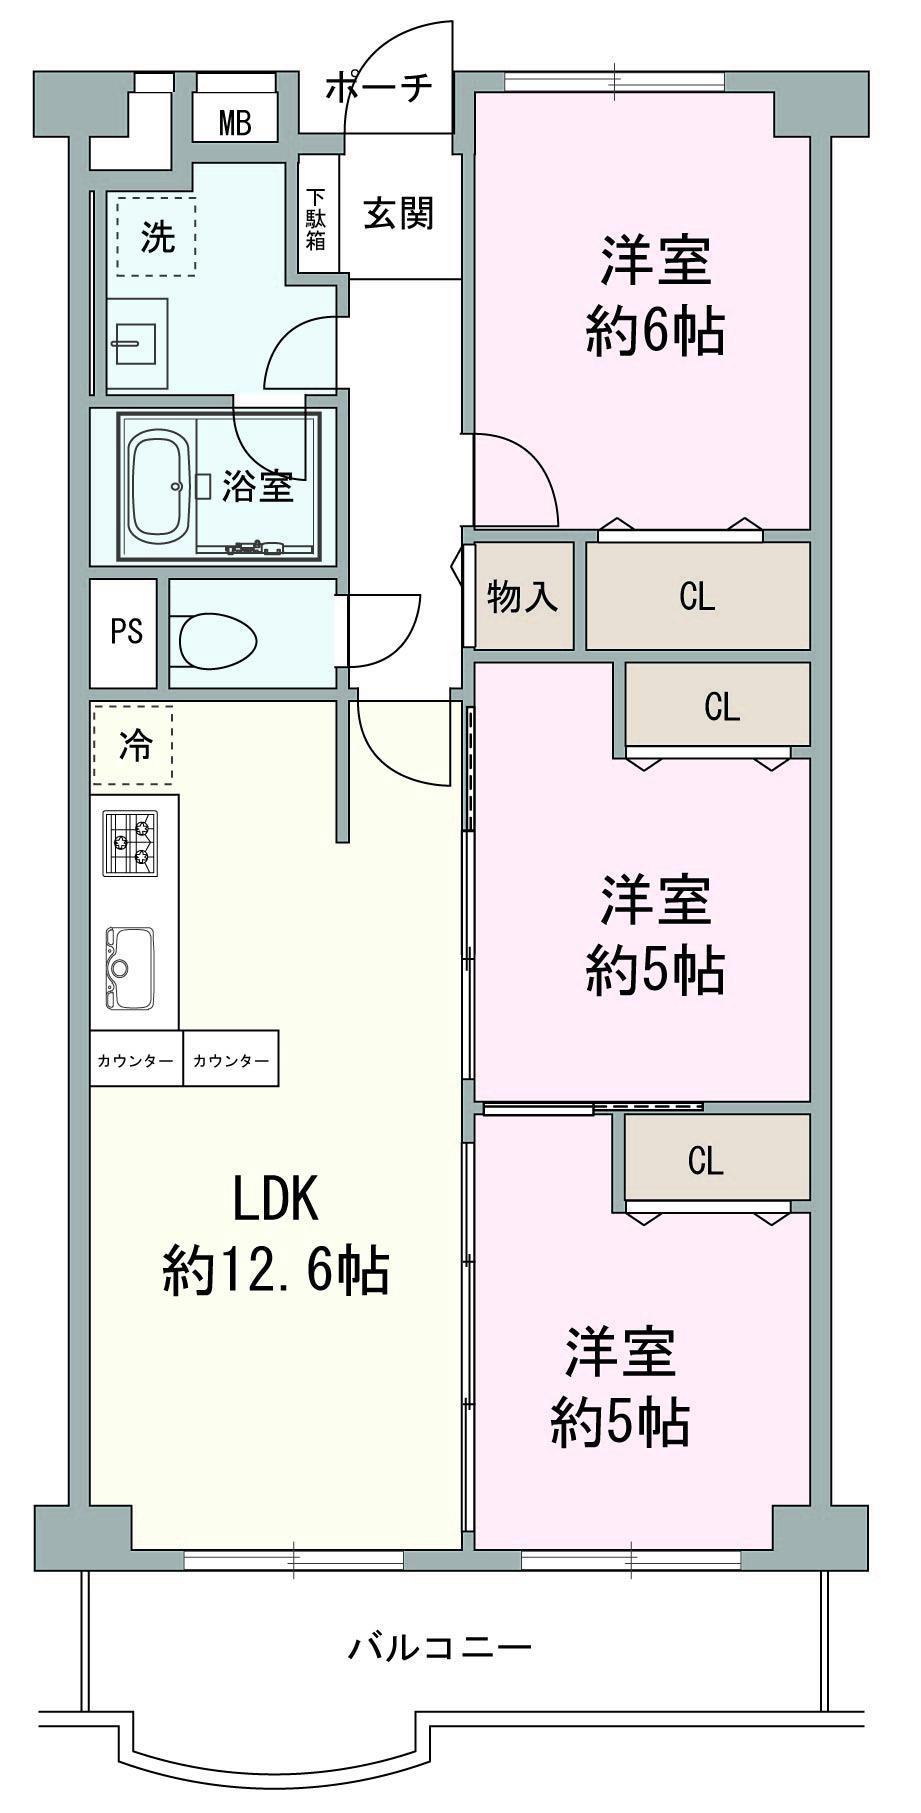 Floor plan. 3LDK, Price 30,800,000 yen, Footprint 66.6 sq m , Balcony area 6.82 sq m